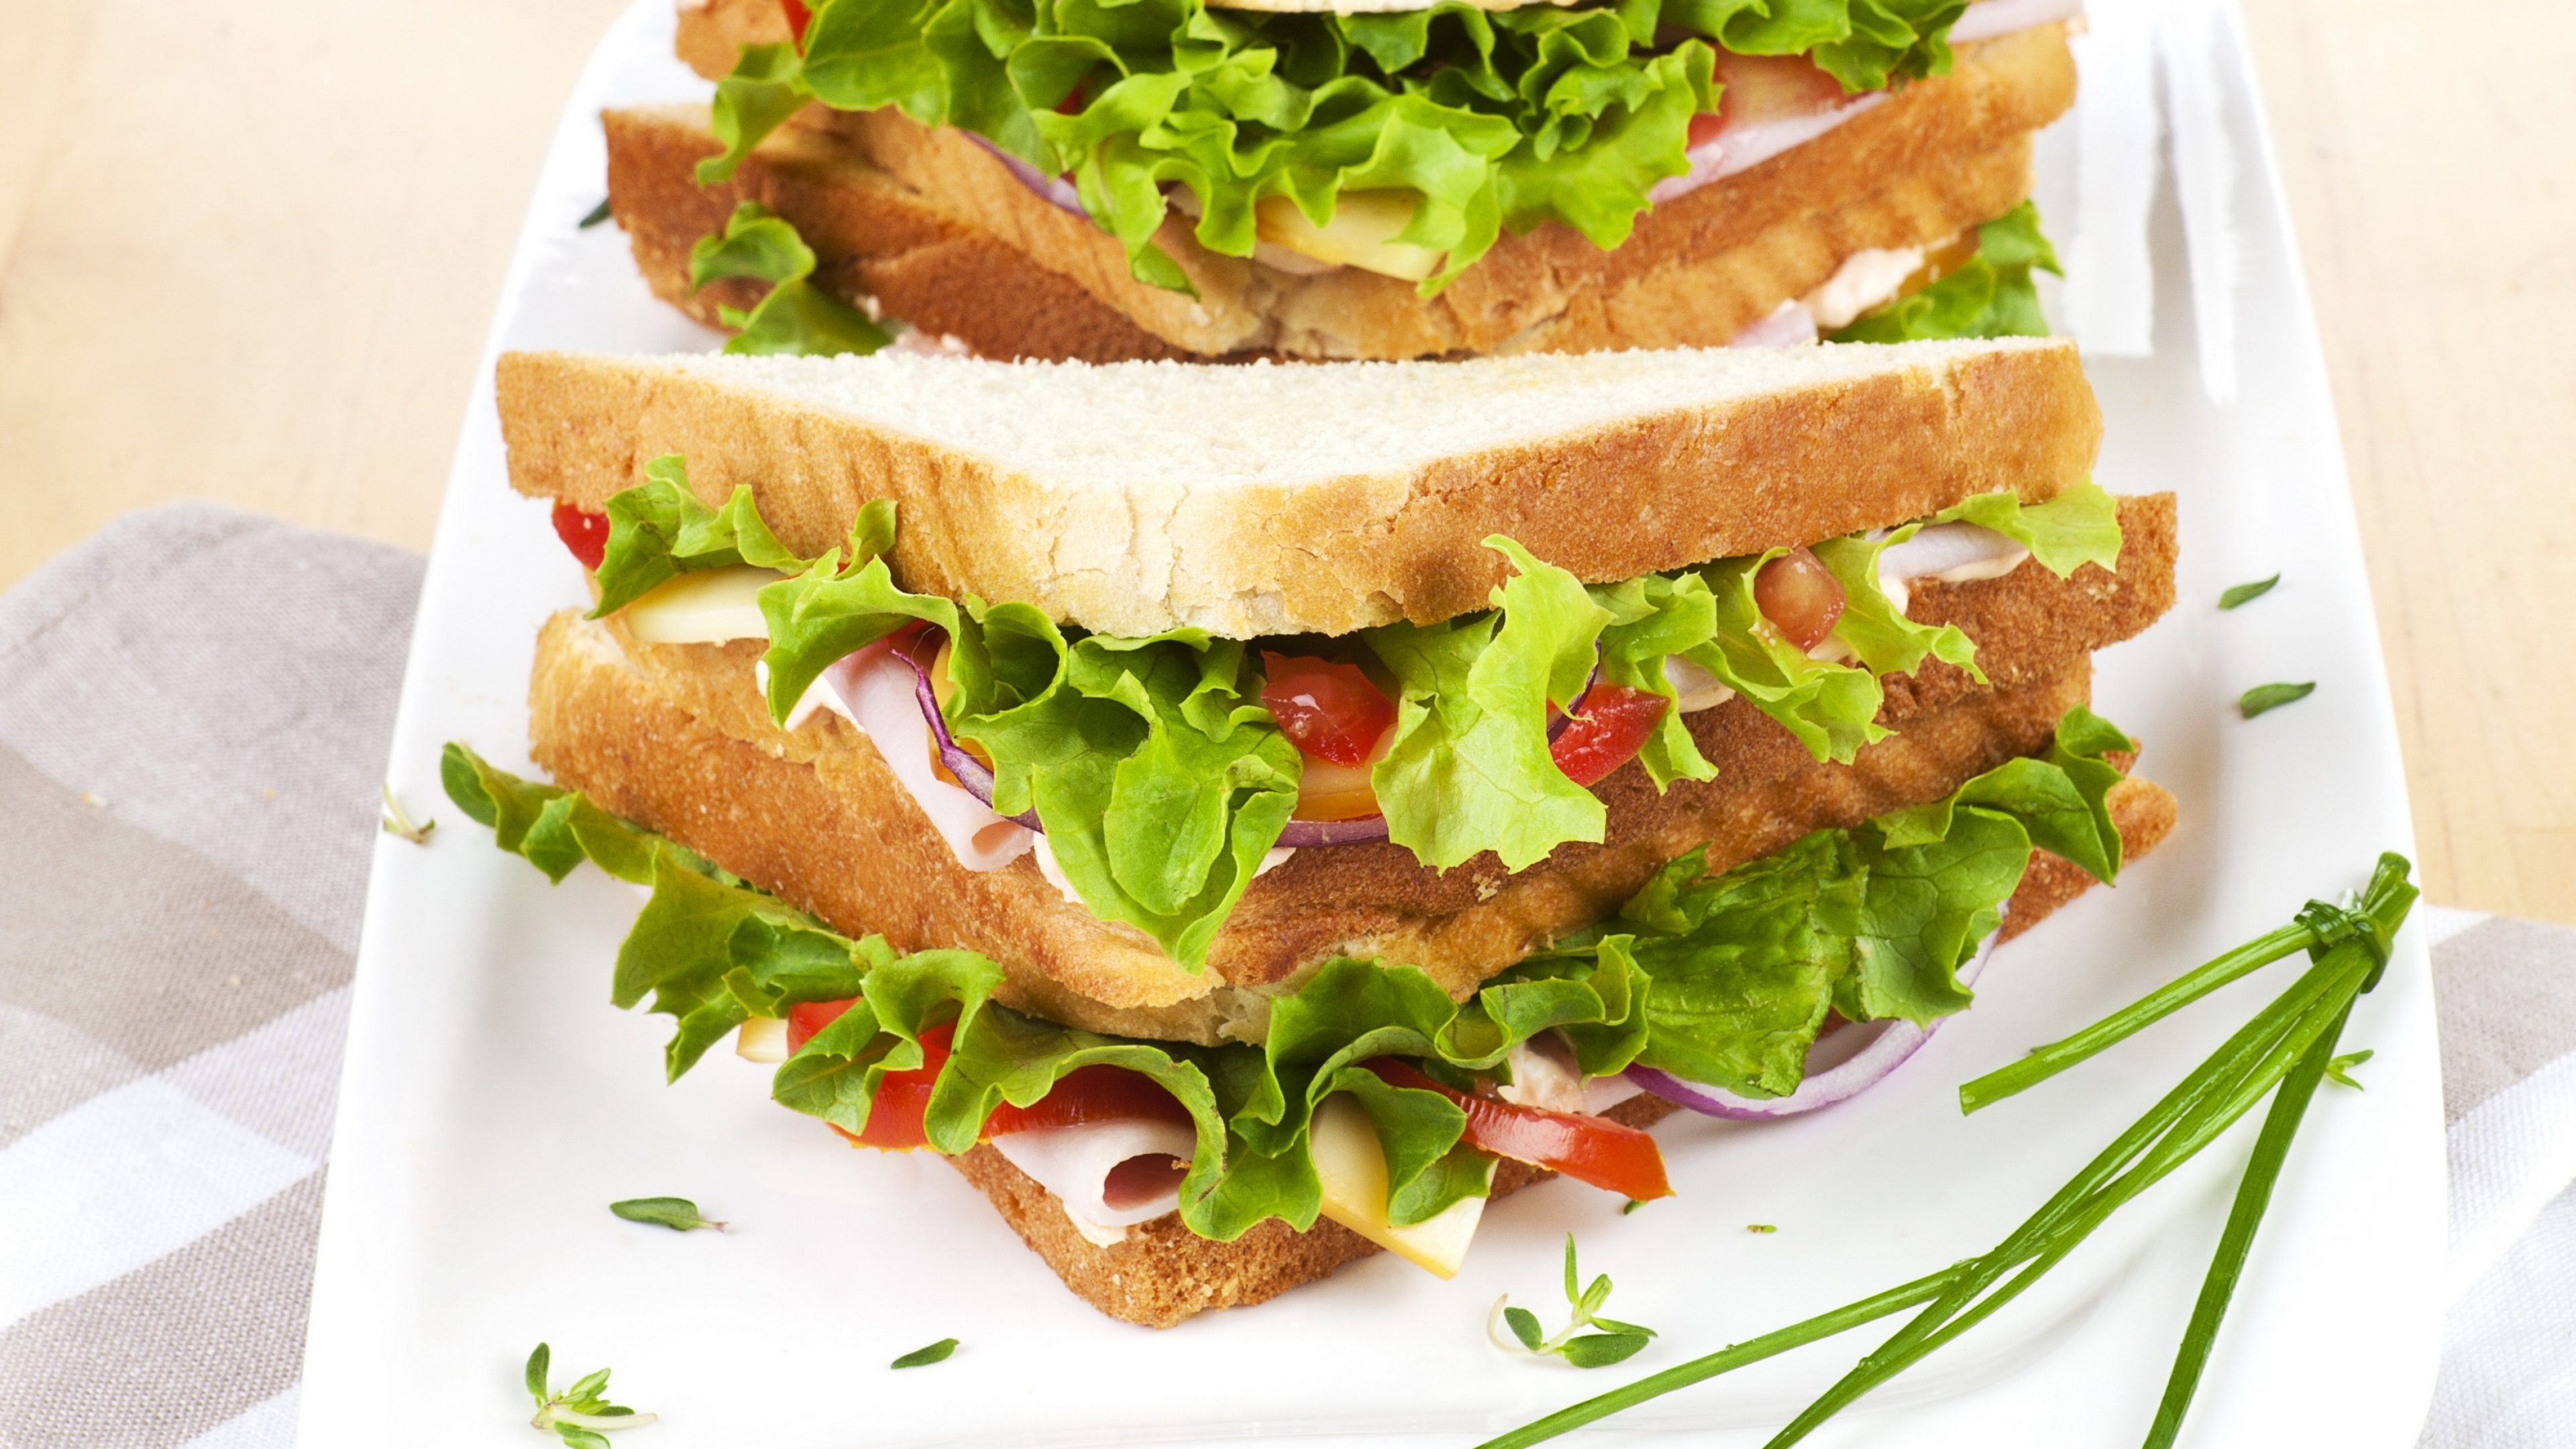 A tasty sandwich with greens.